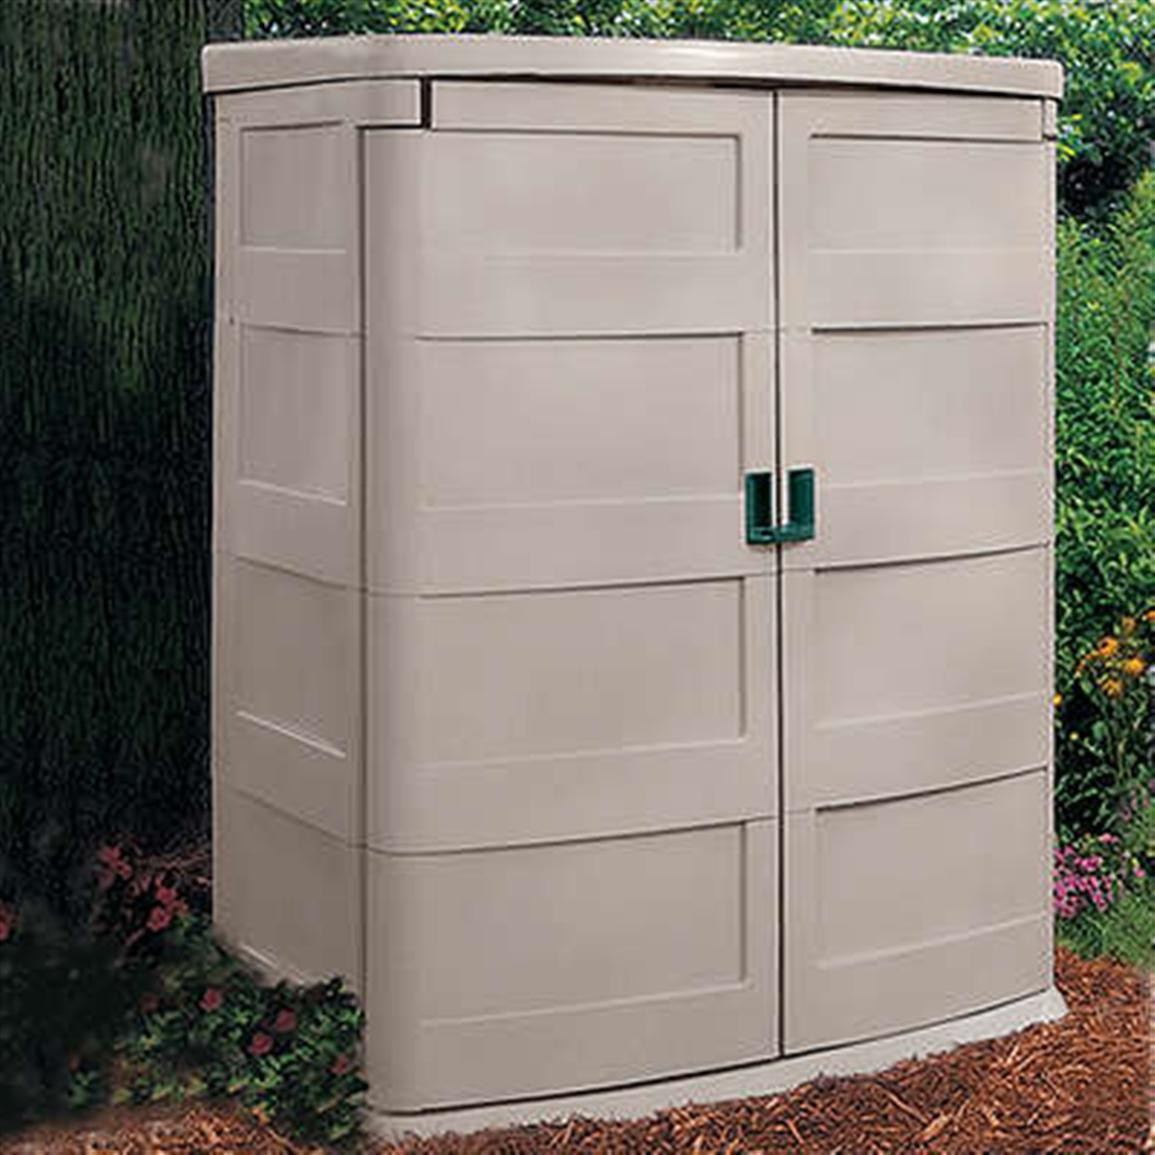 Best ideas about Suncast Garage Storage
. Save or Pin Suncast Storage Cabinets Now.